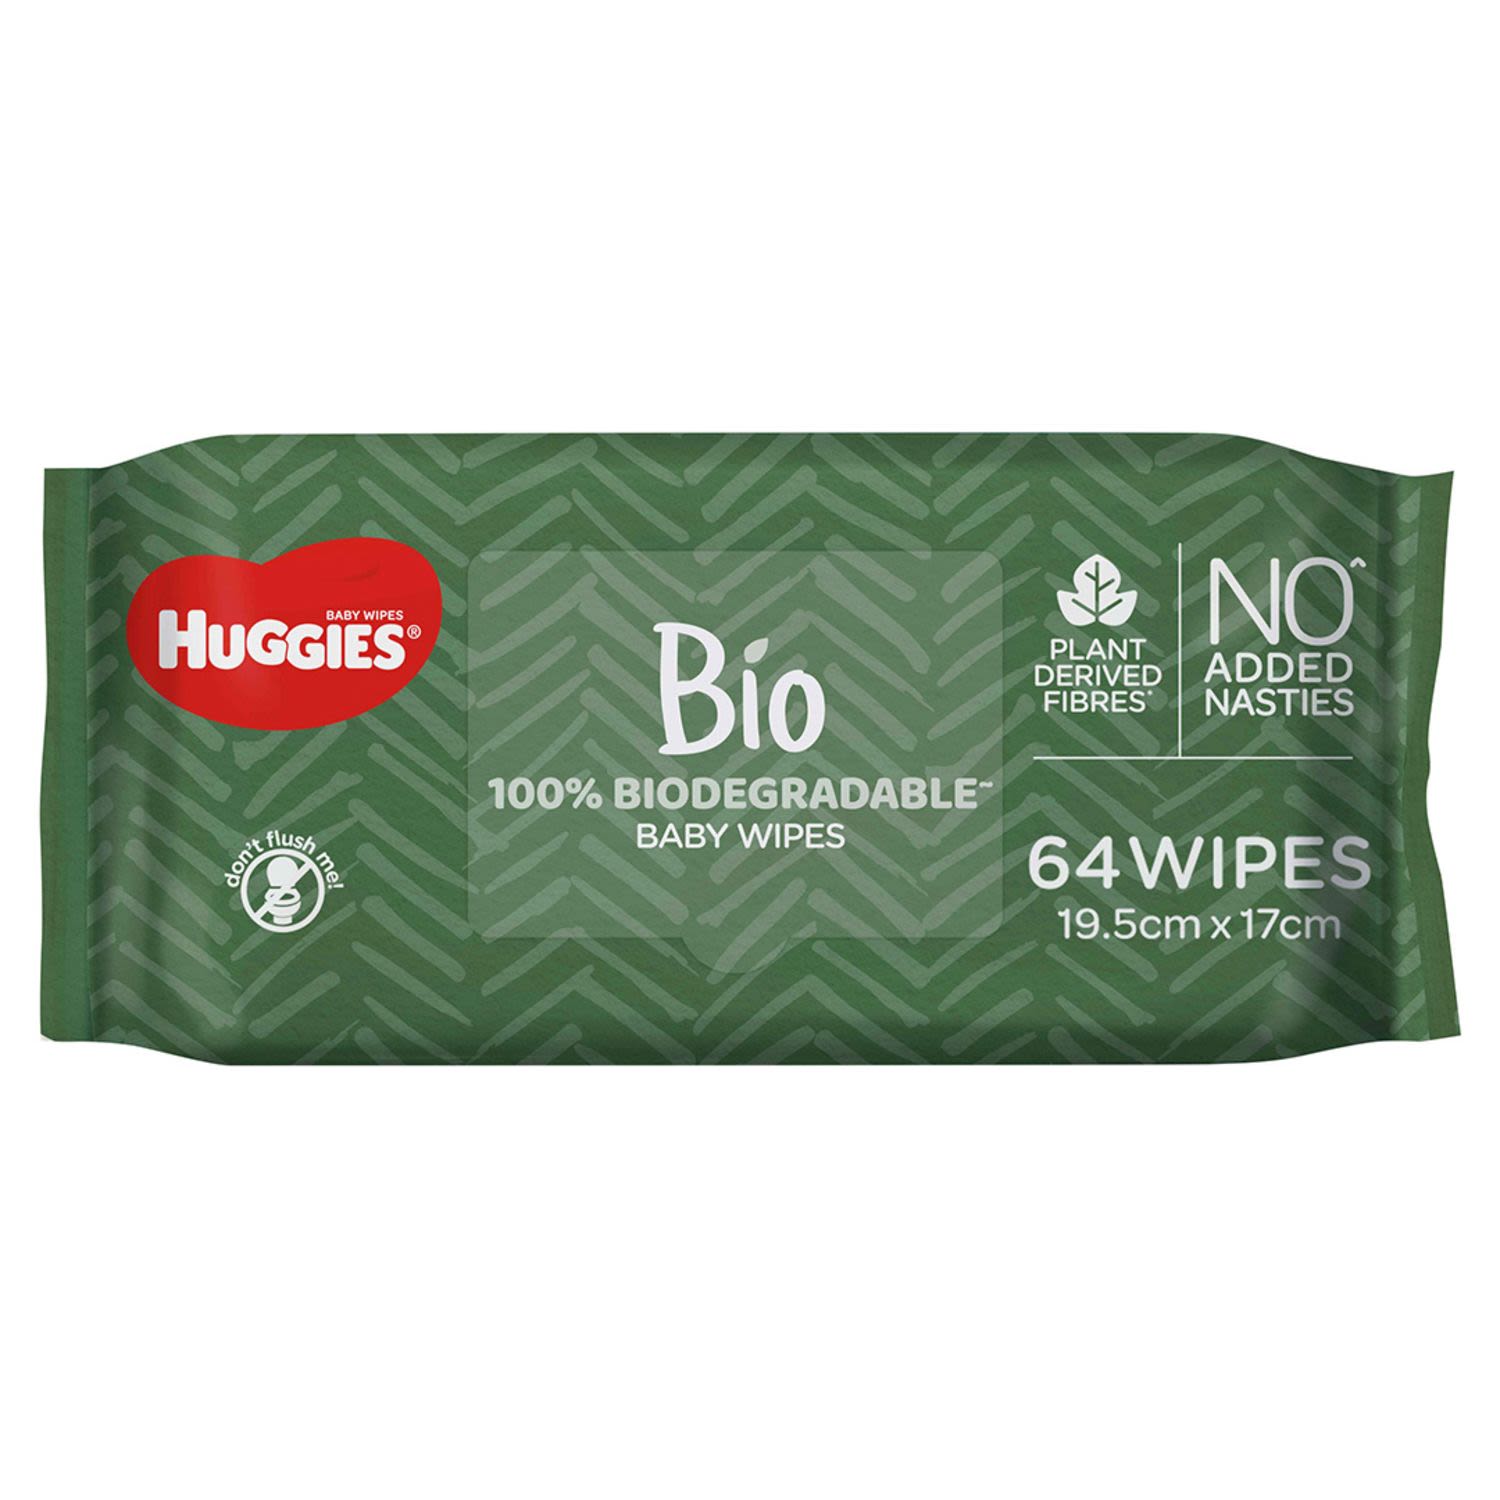 Huggies Biodegradable Baby Wipes, 64 Each